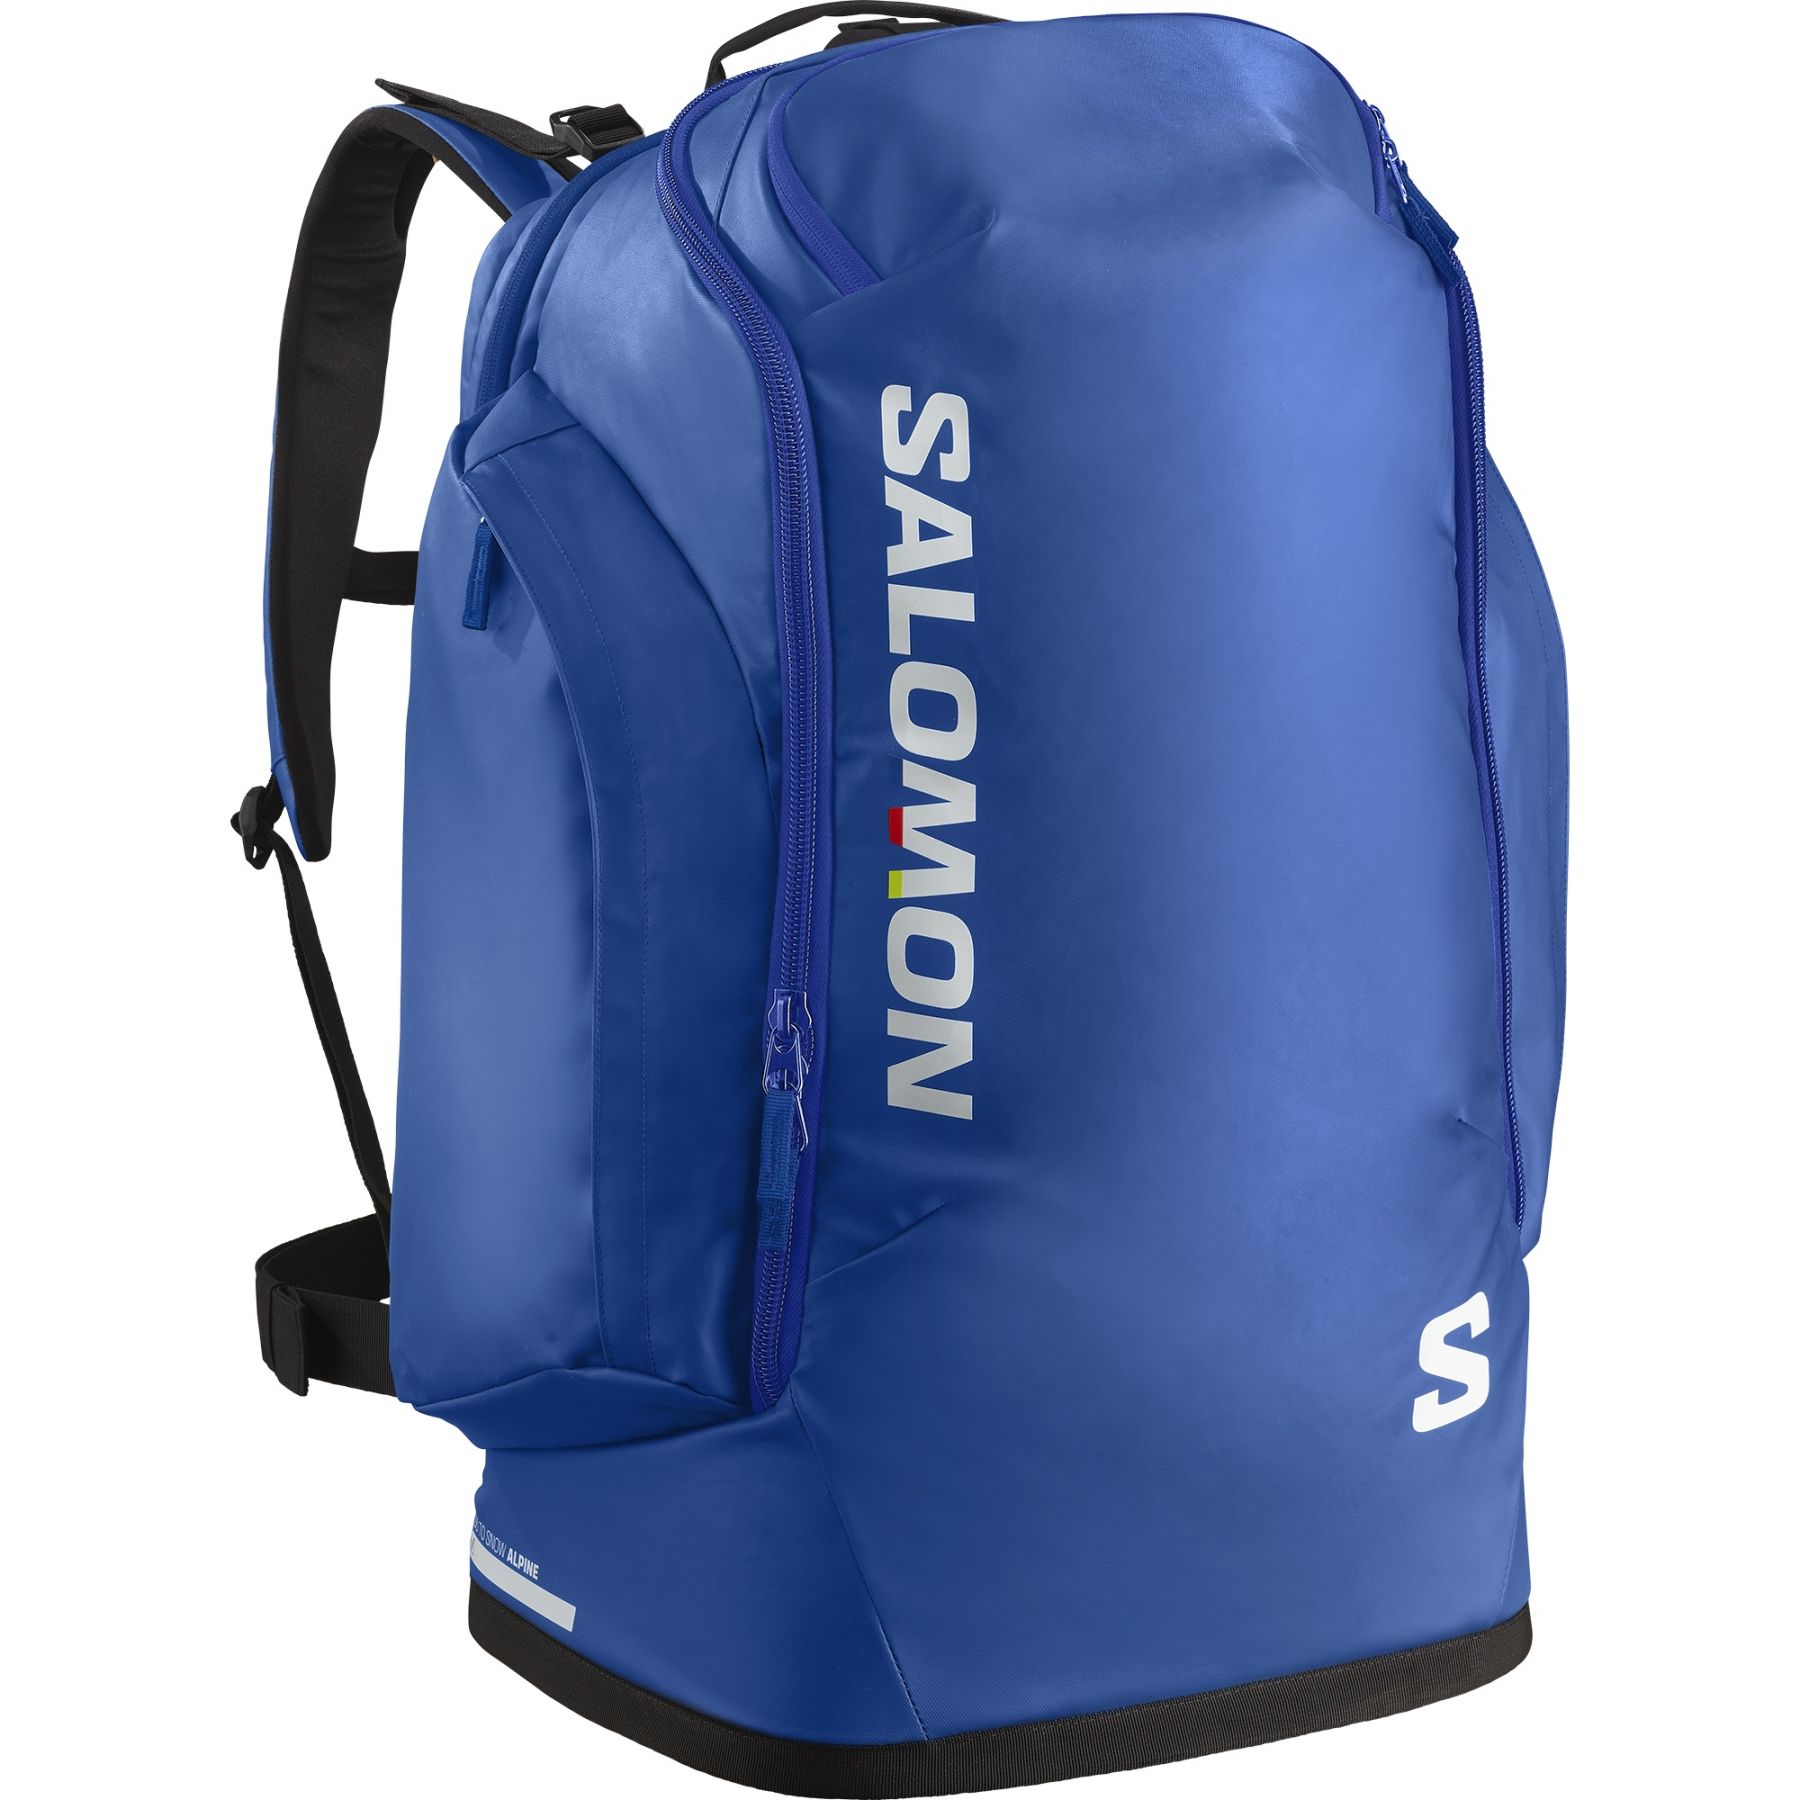 5: Salomon Go To Snow, 50L, rygsæk, blå